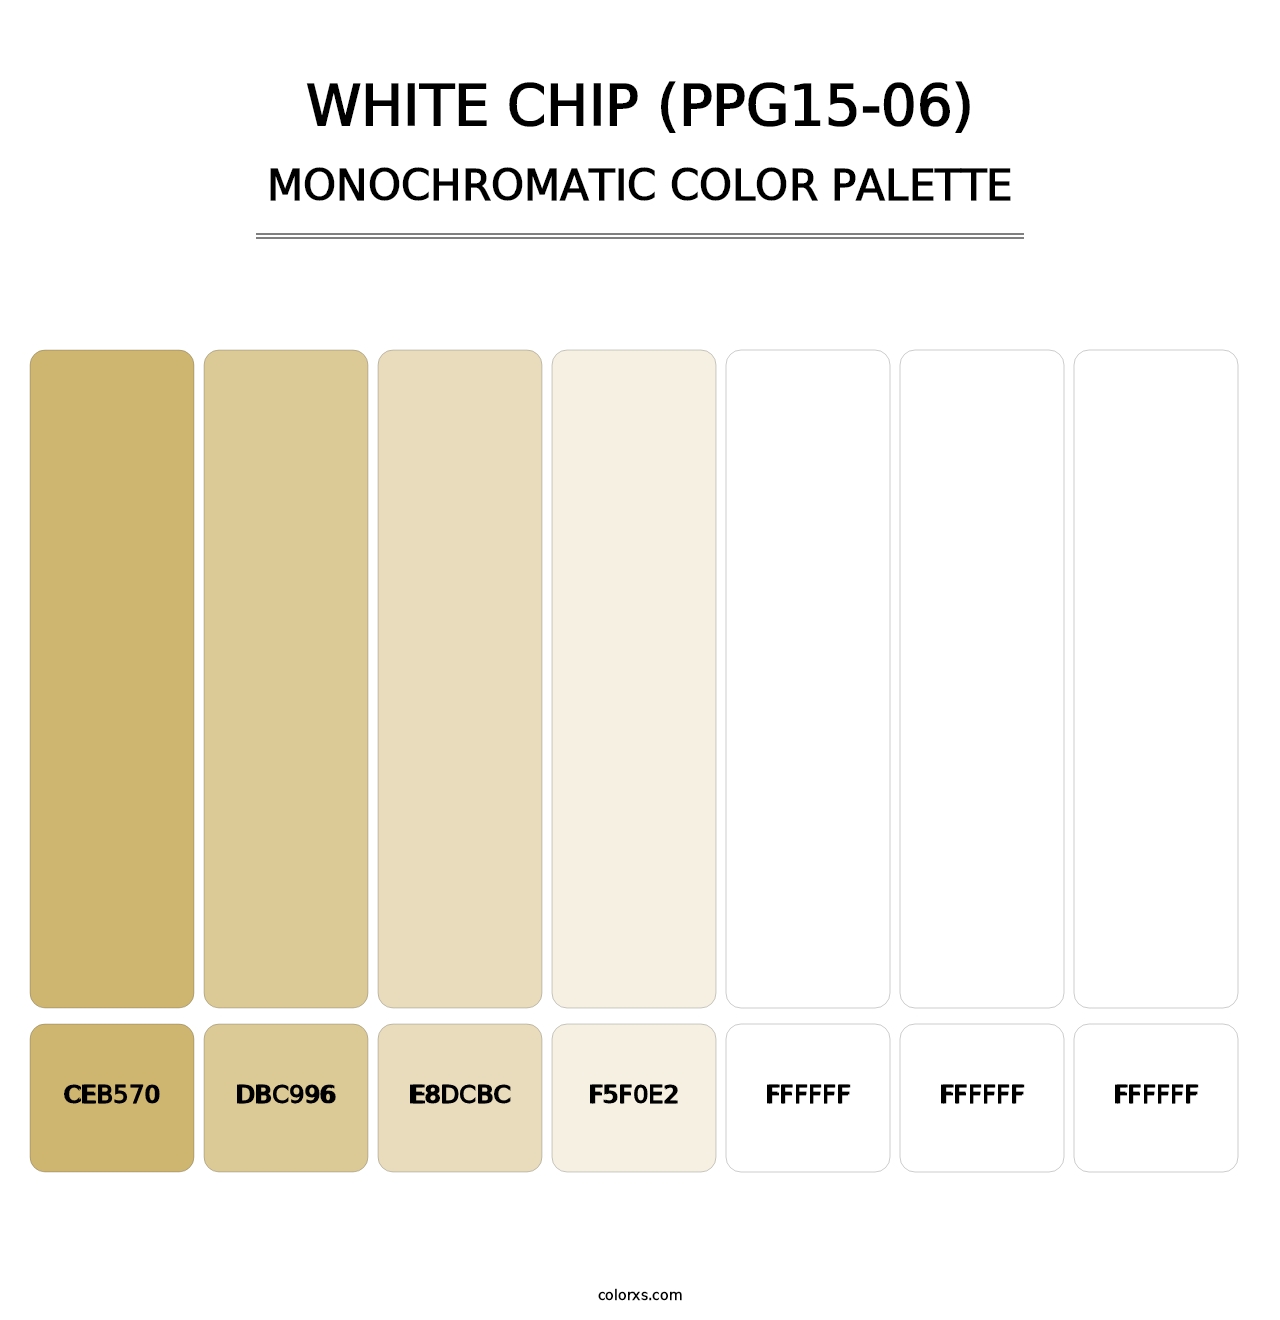 White Chip (PPG15-06) - Monochromatic Color Palette